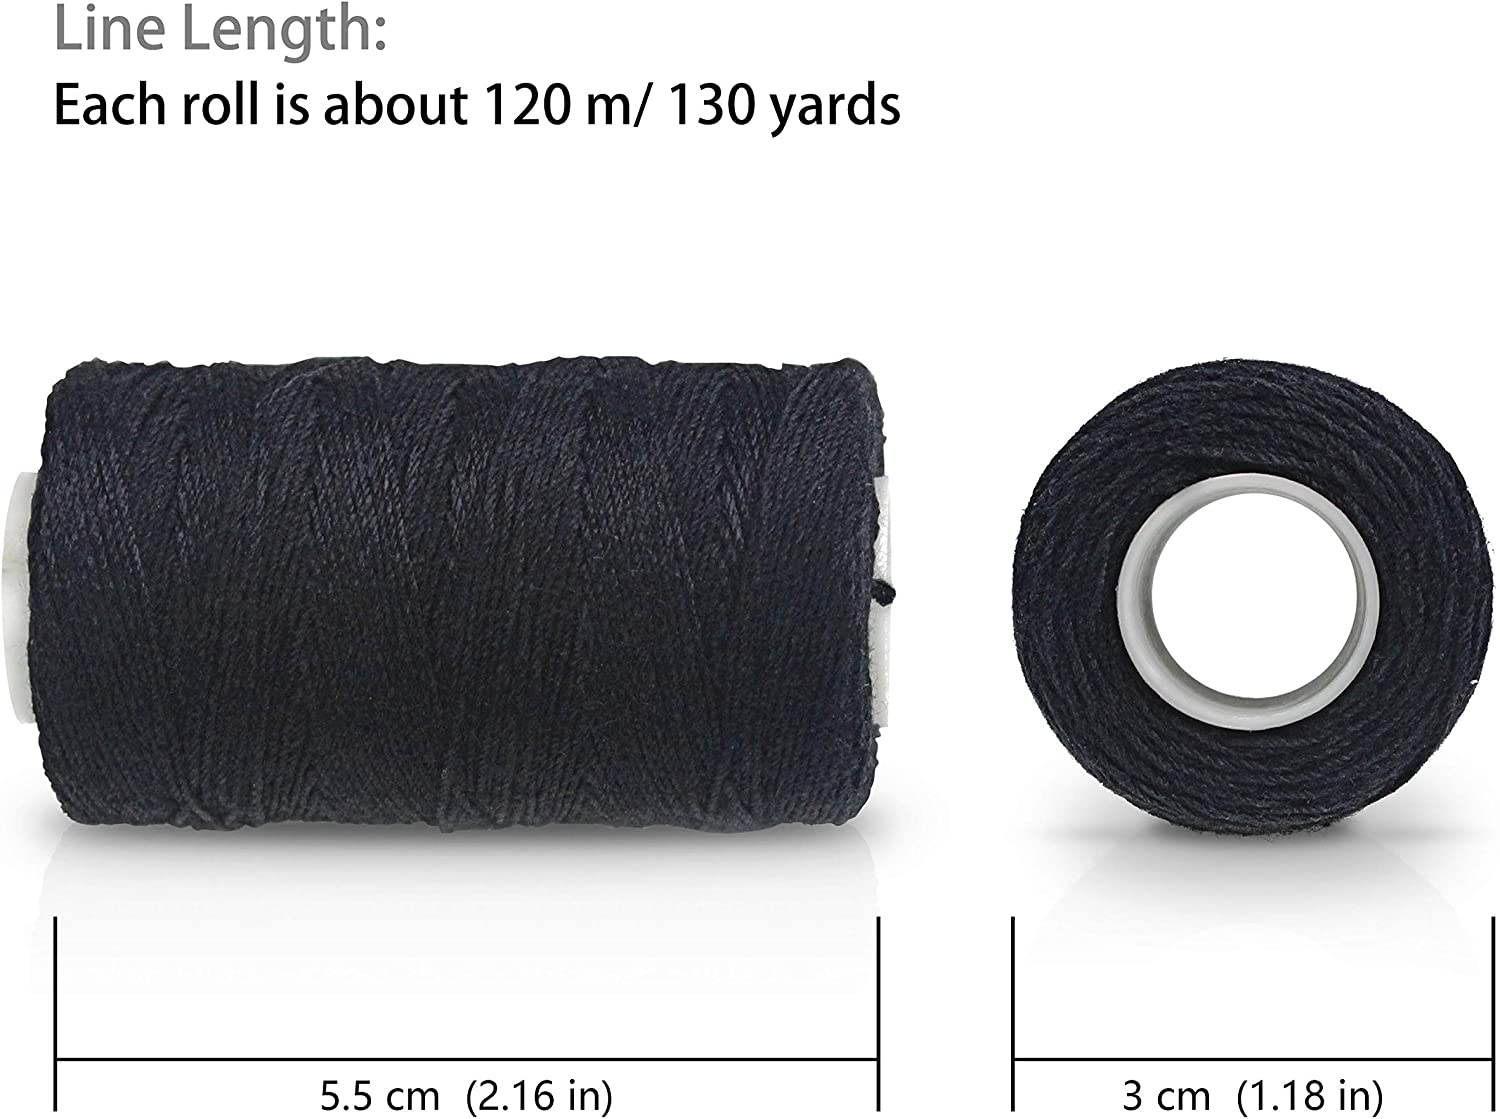 Buy Mandala Crafts Black Hair Weave Needle and Thread Set - Hair